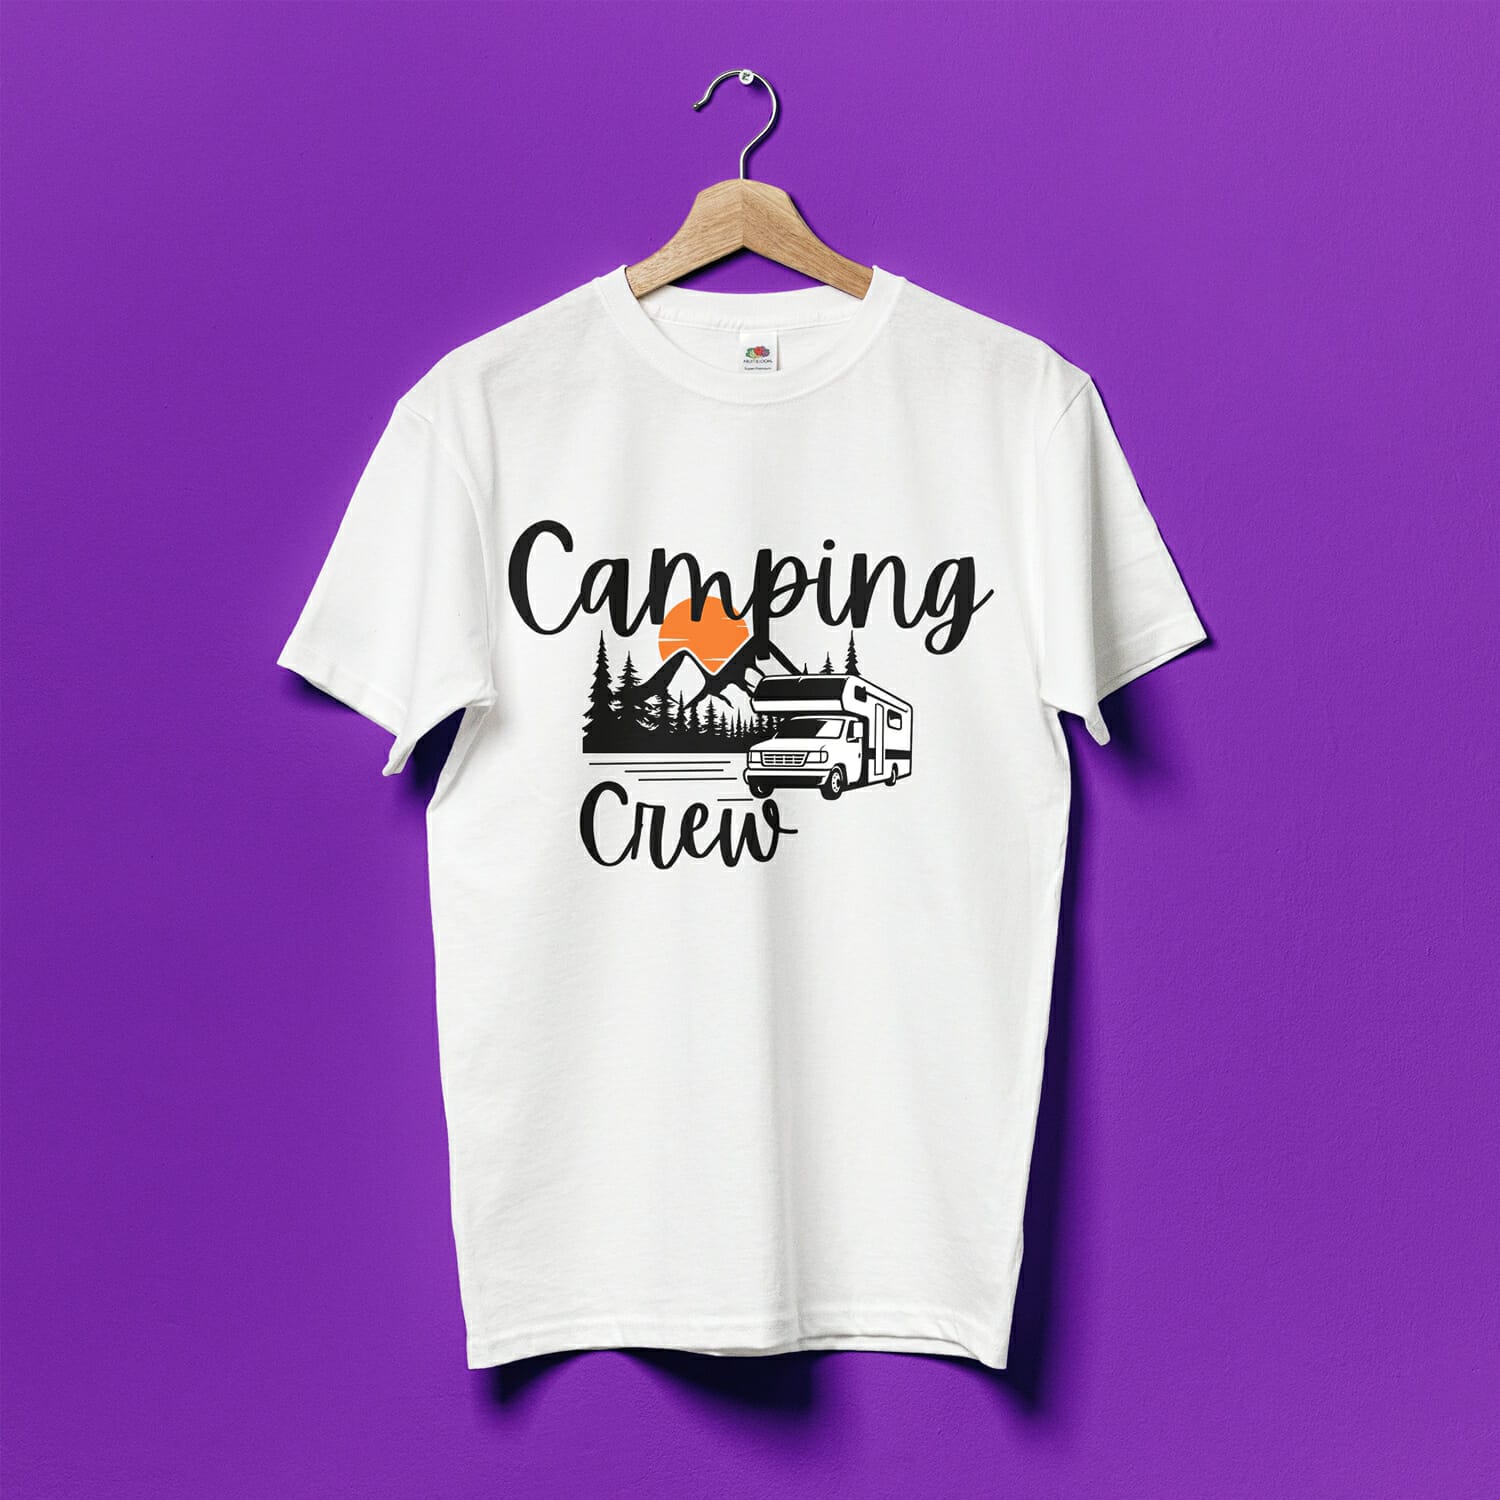 Camping Crew T-shirt Design